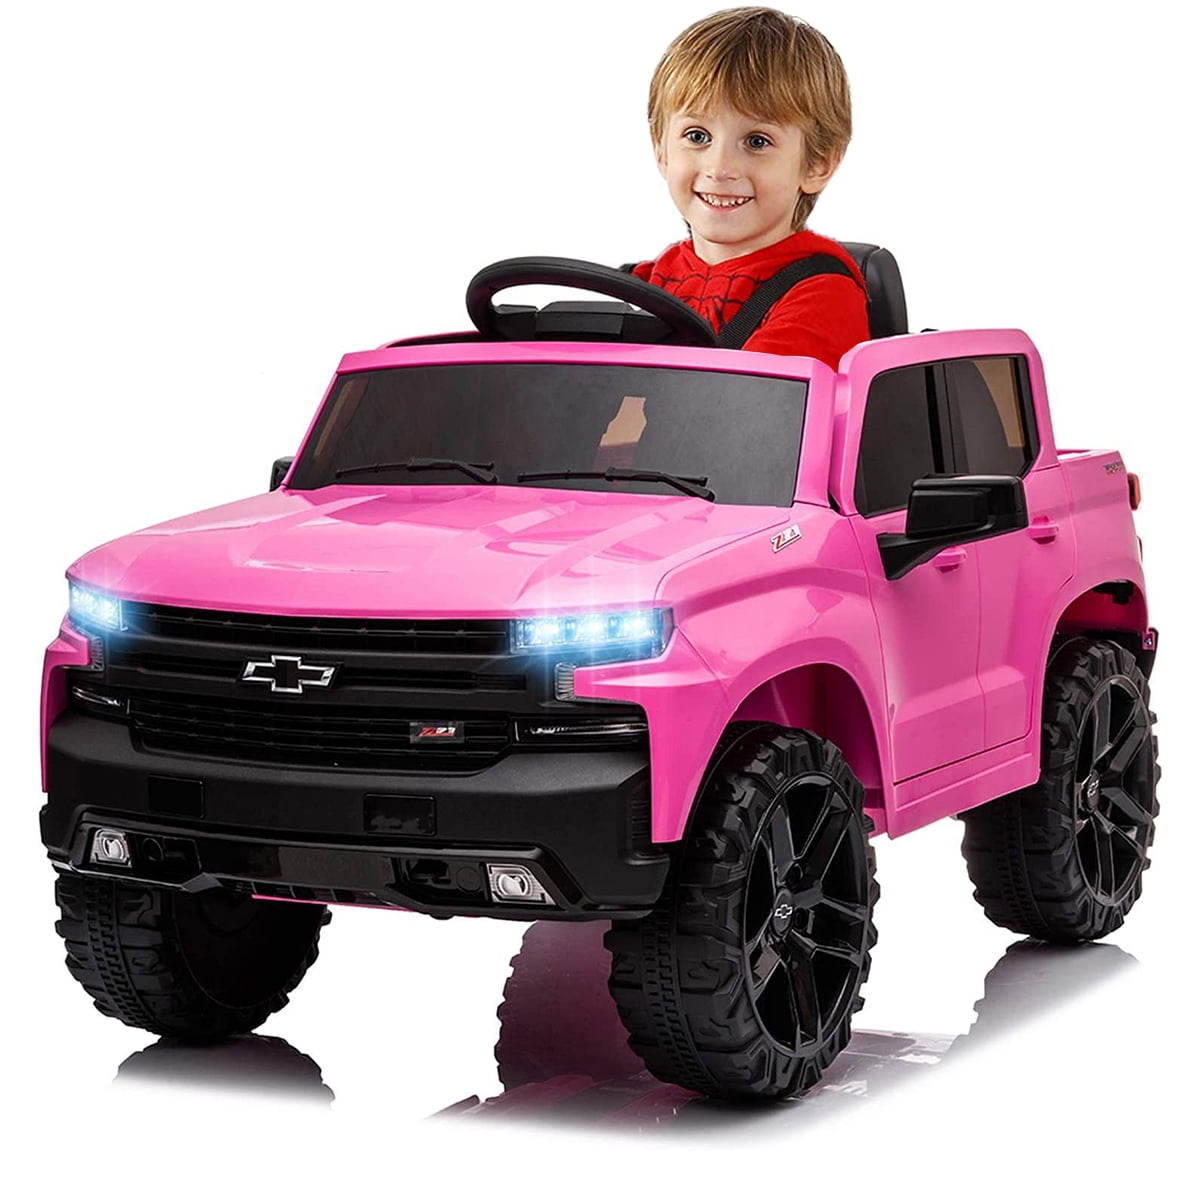 Kimbosmart Chevrolet Silverado 12V Kids Electric Ride on Car w/ Parents Remote Control, 2 Speeds, 4 Wheels, LED Lights, Music, Christmas Gifts